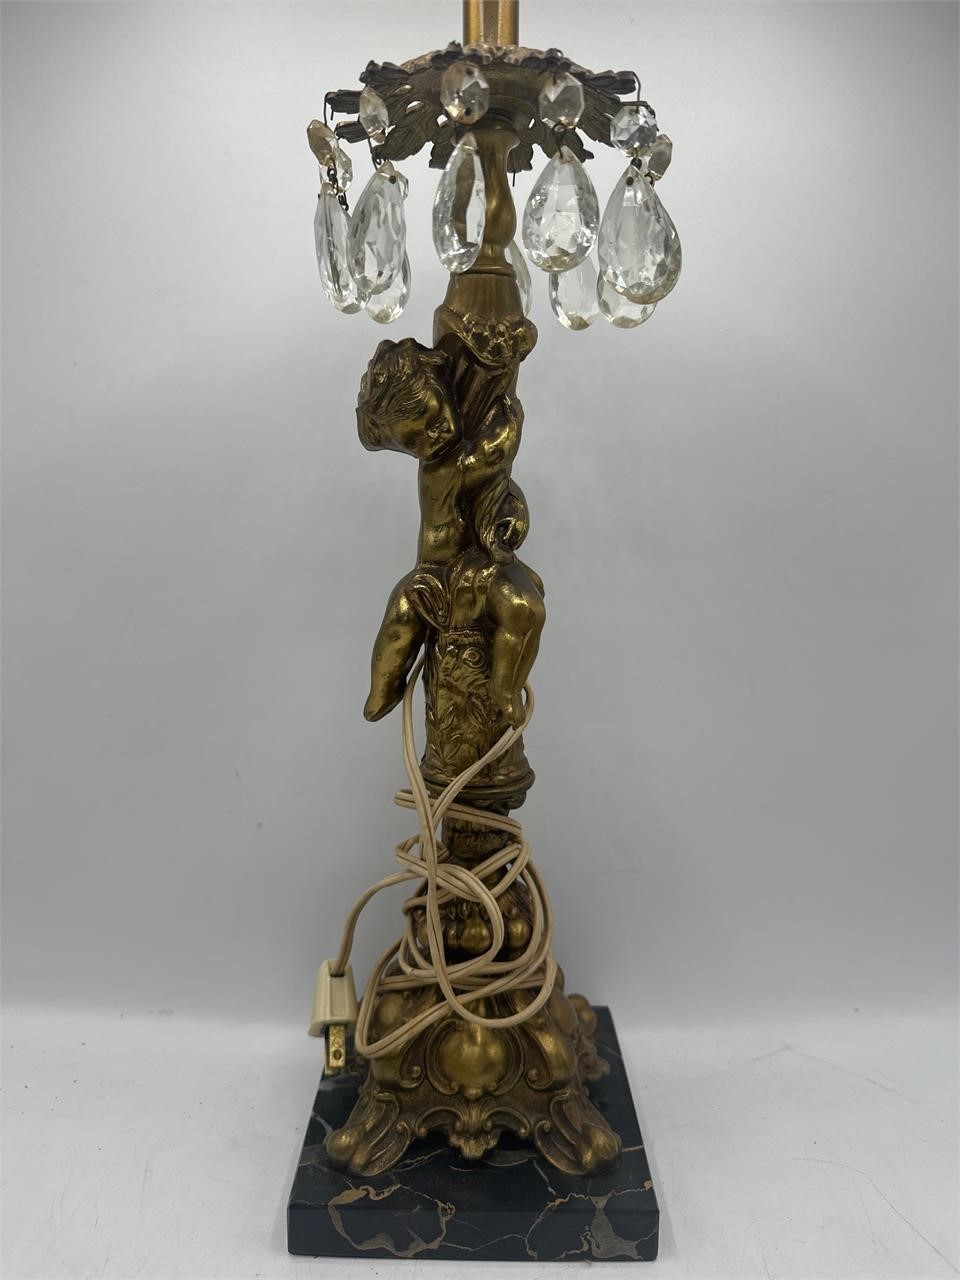 Vintage cherub lamp with prisms